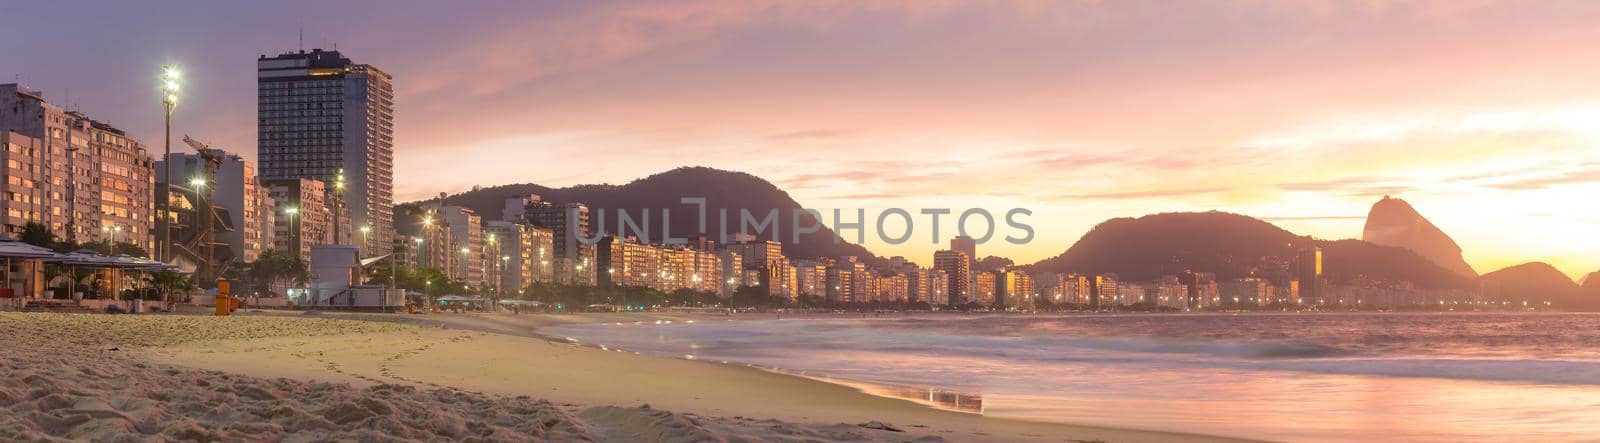 Panorama view of Copacabana and mountain Sugar Loaf sunrise in Rio de Janeiro Brazil